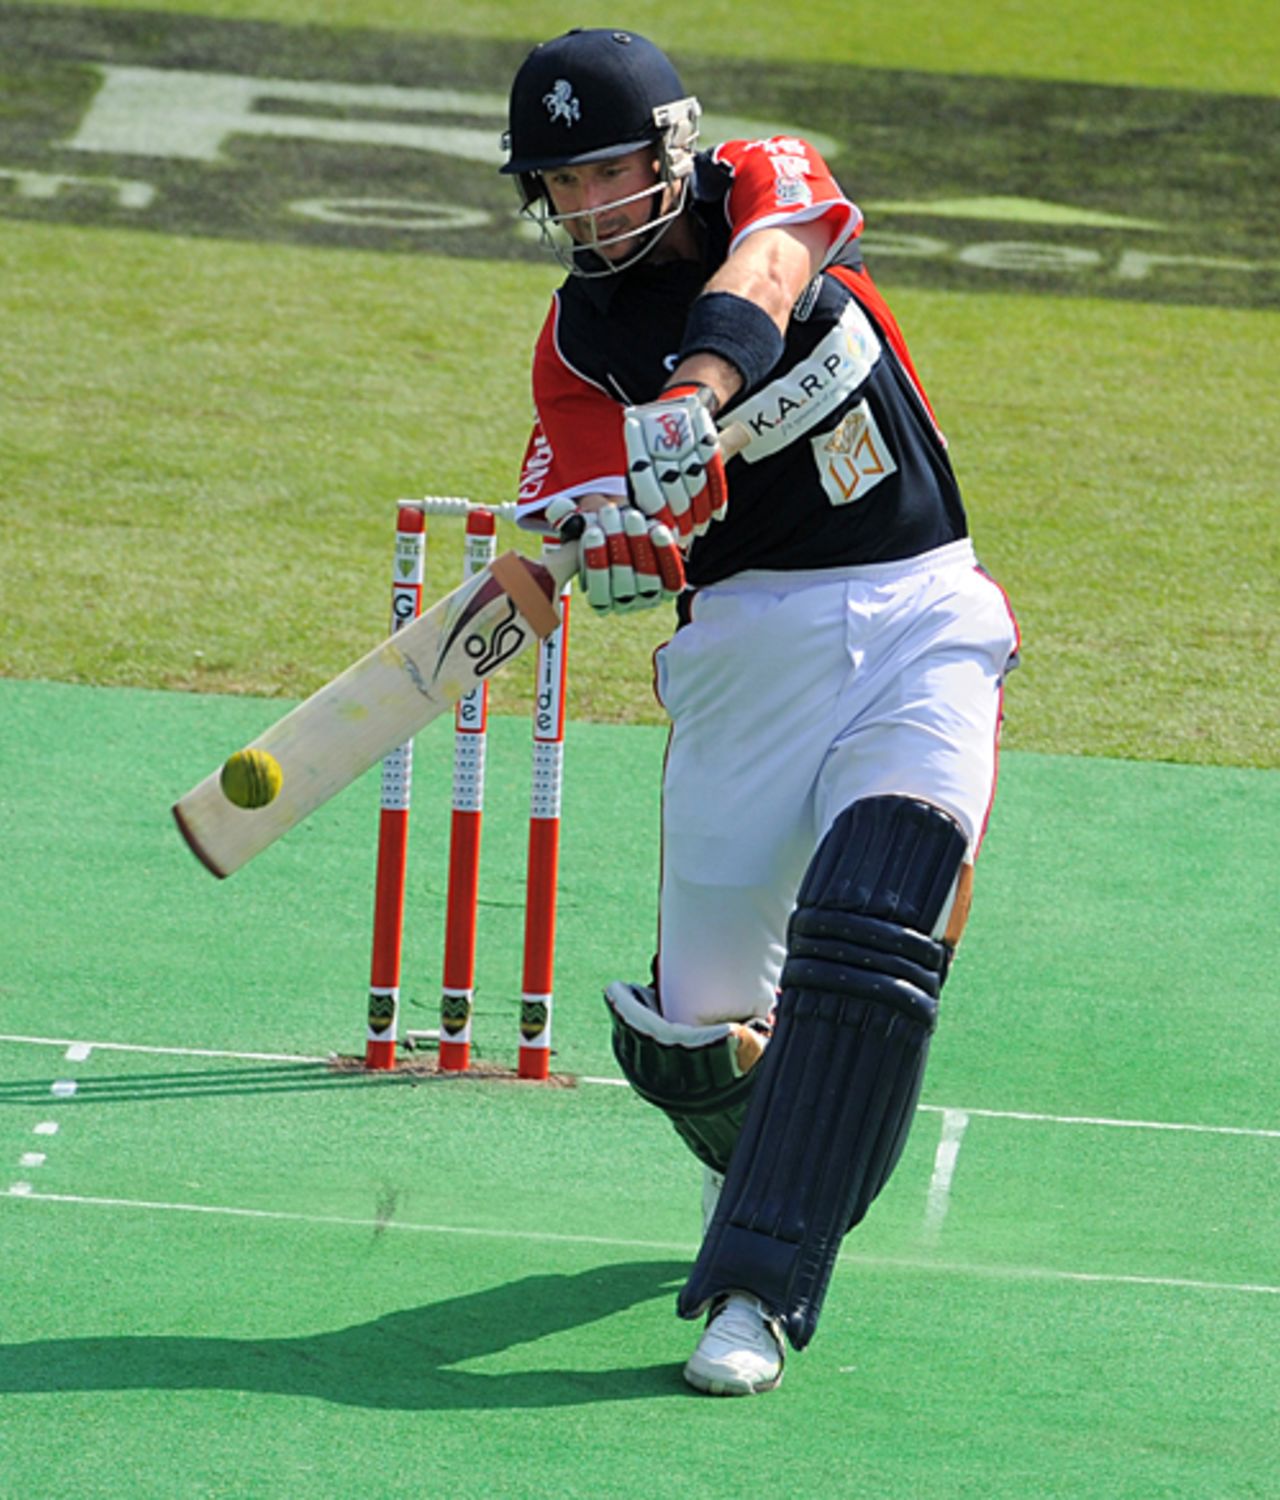 Darren Stevens on the attack, England v India, Hong Kong Cricket Sixes, Kowloon, October 31, 2009